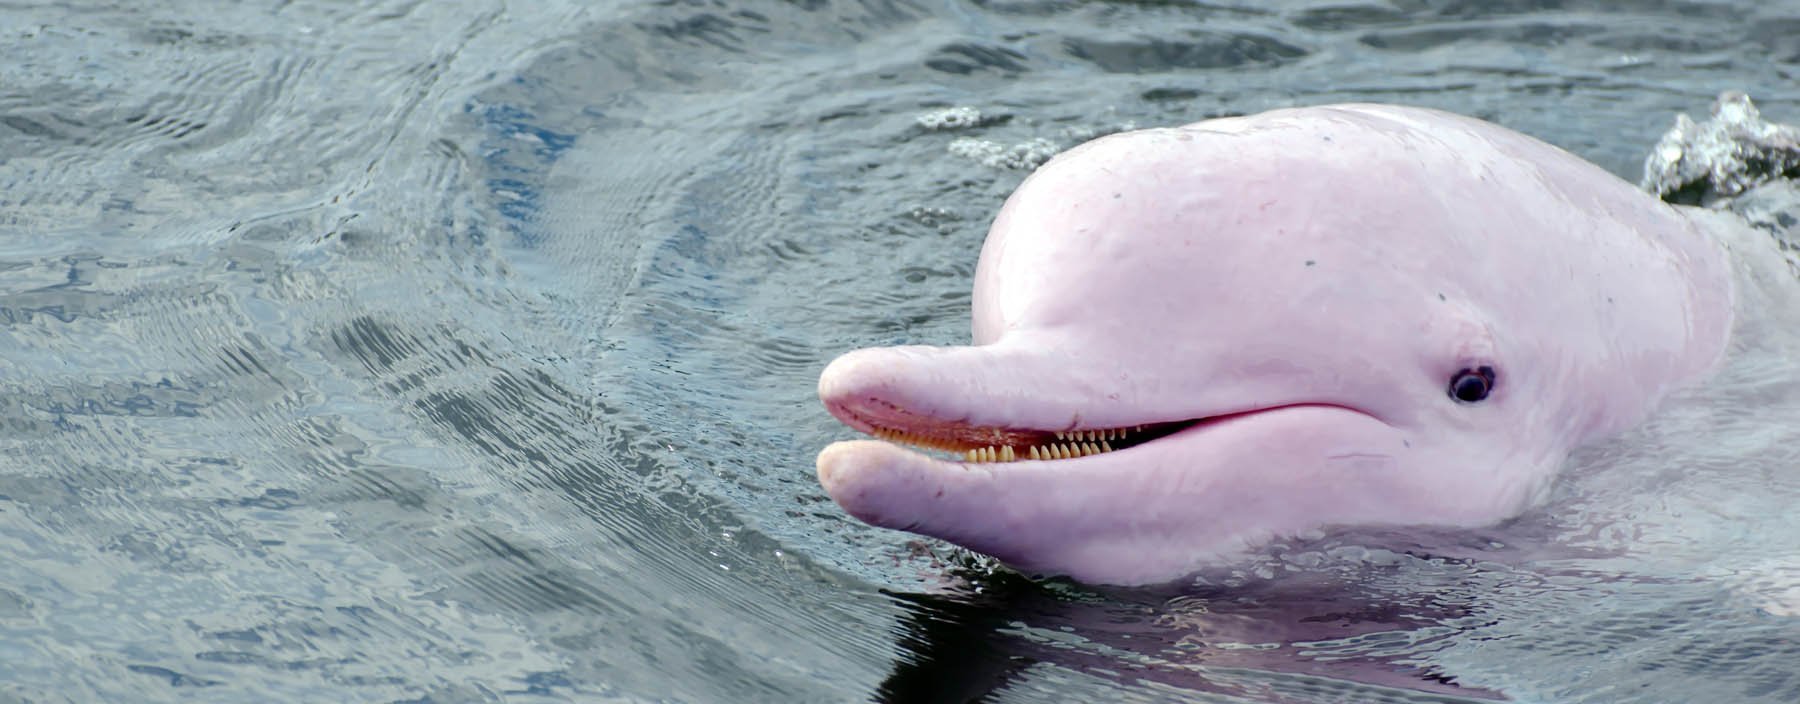 th, khanom, roze dolfijnen (1).jpg